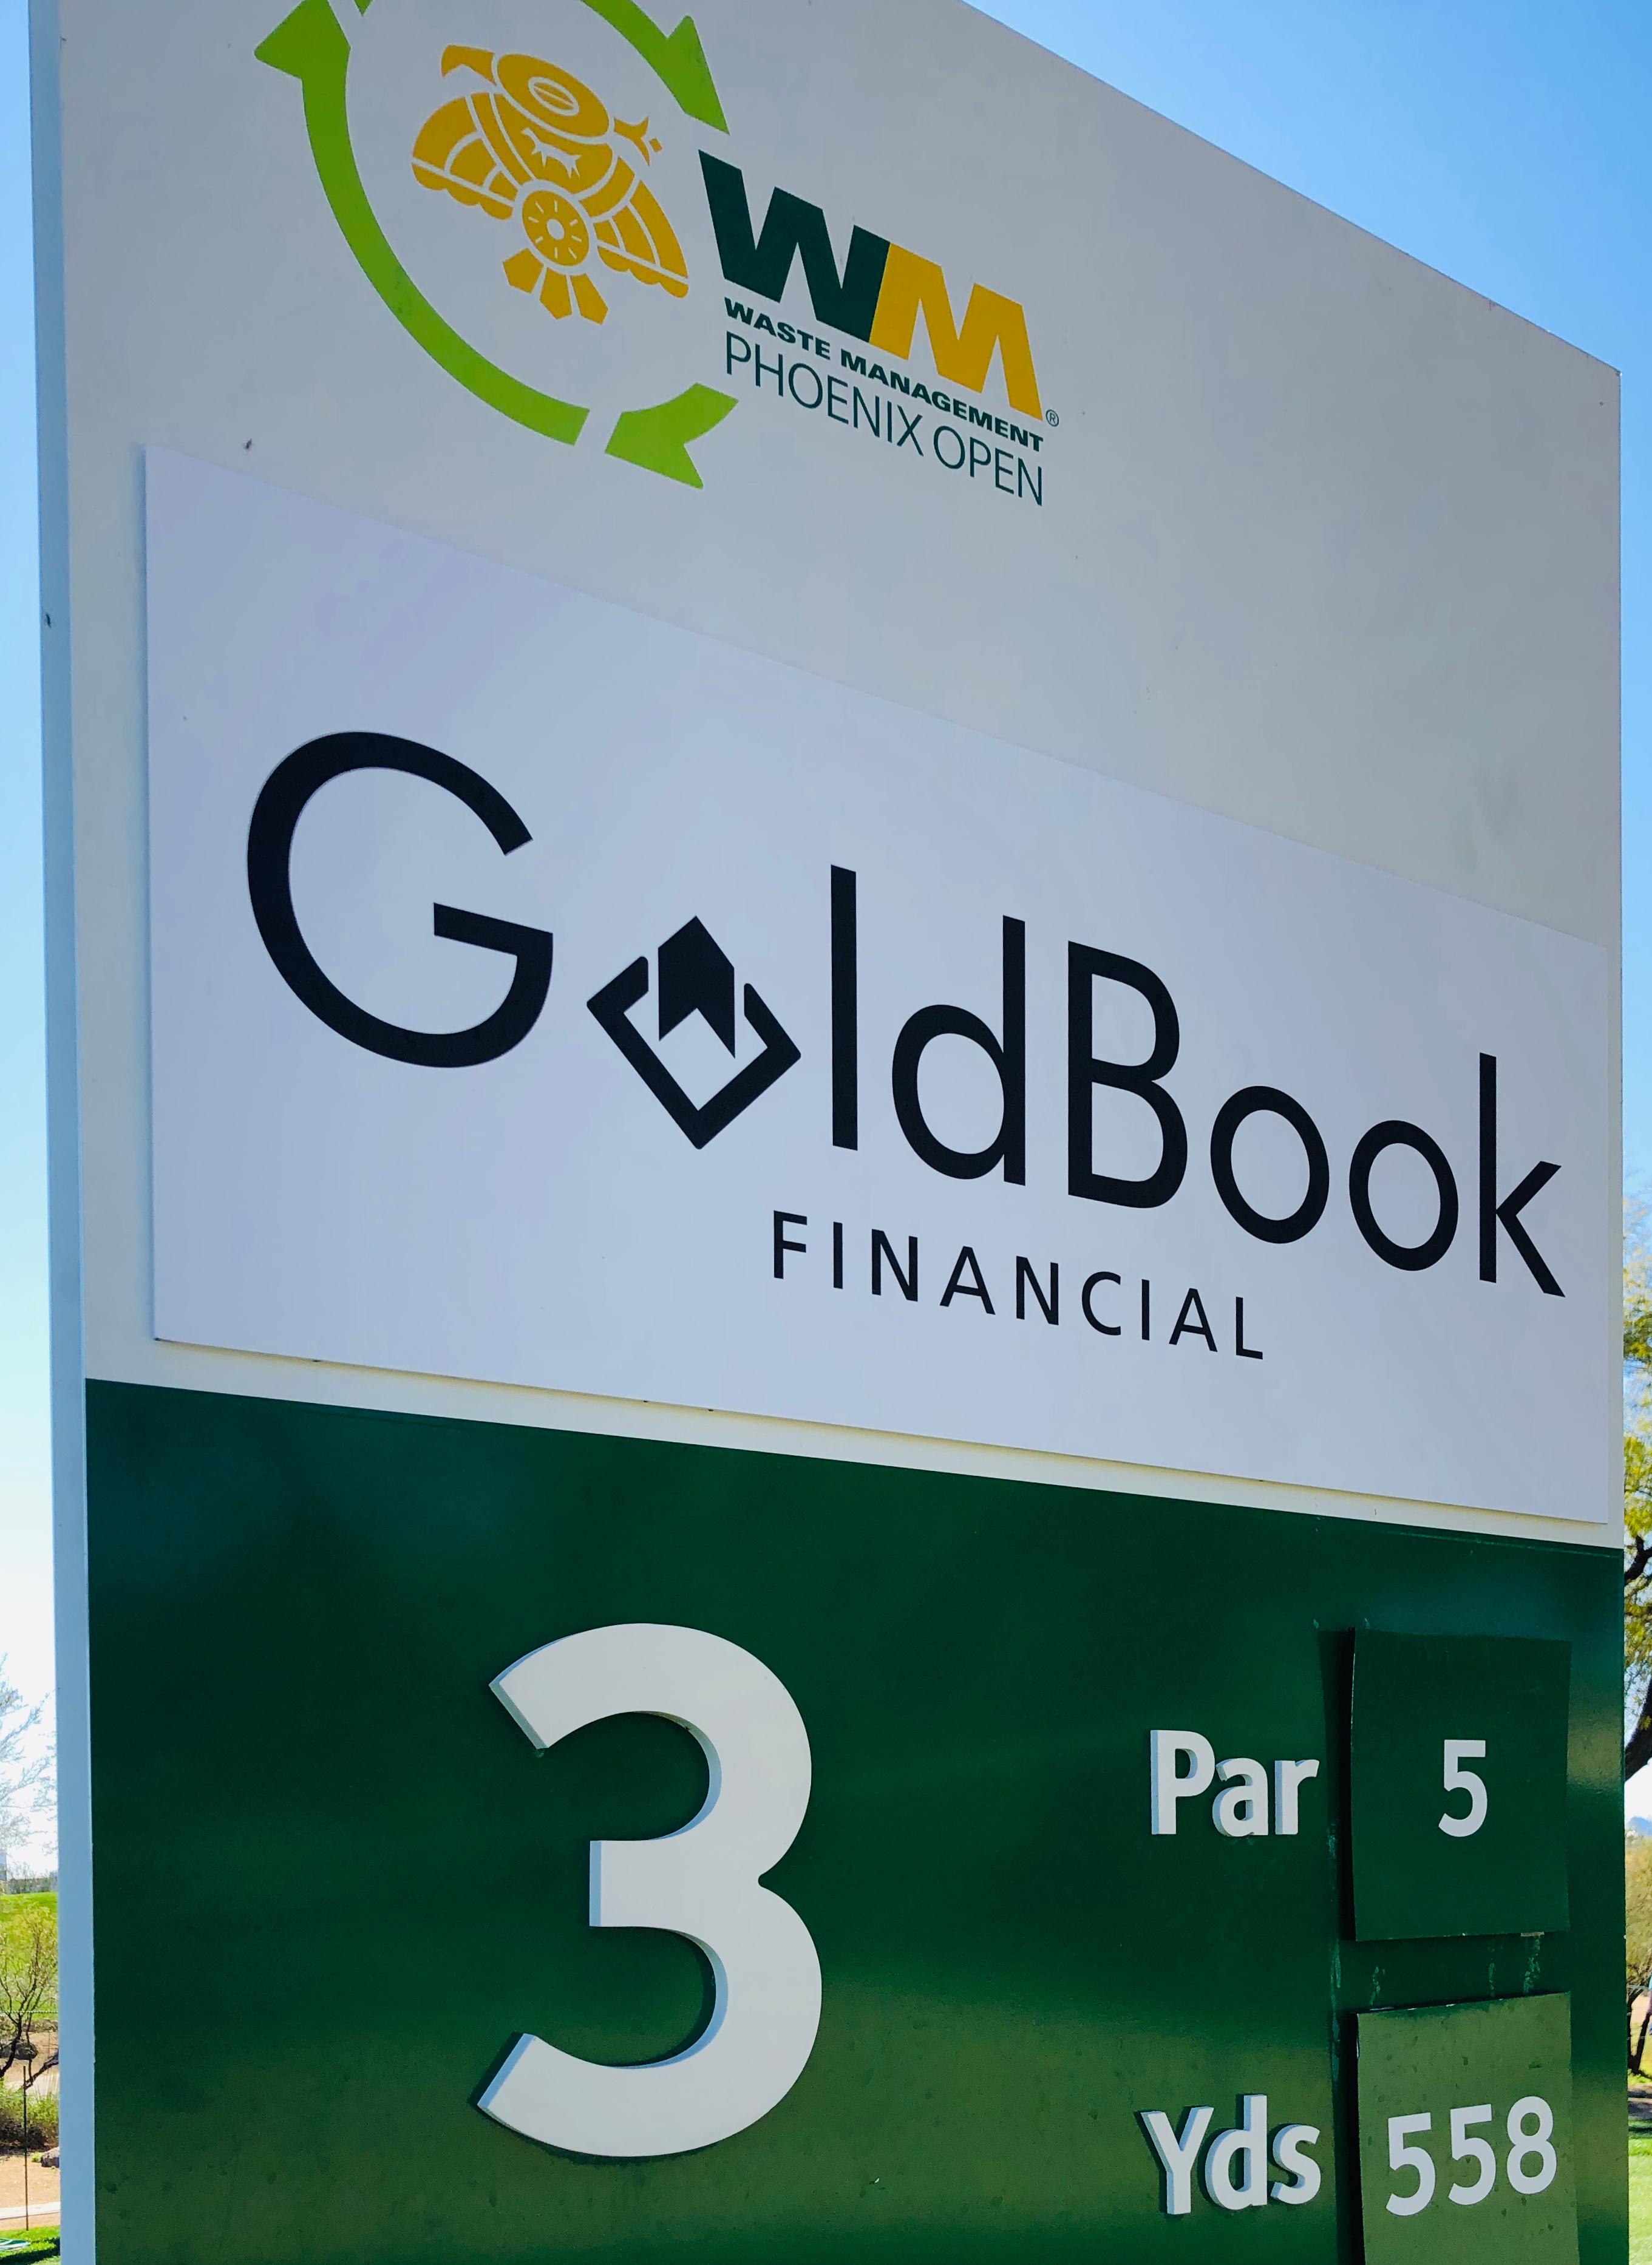 GoldBook Financial North Scottsdale Photo